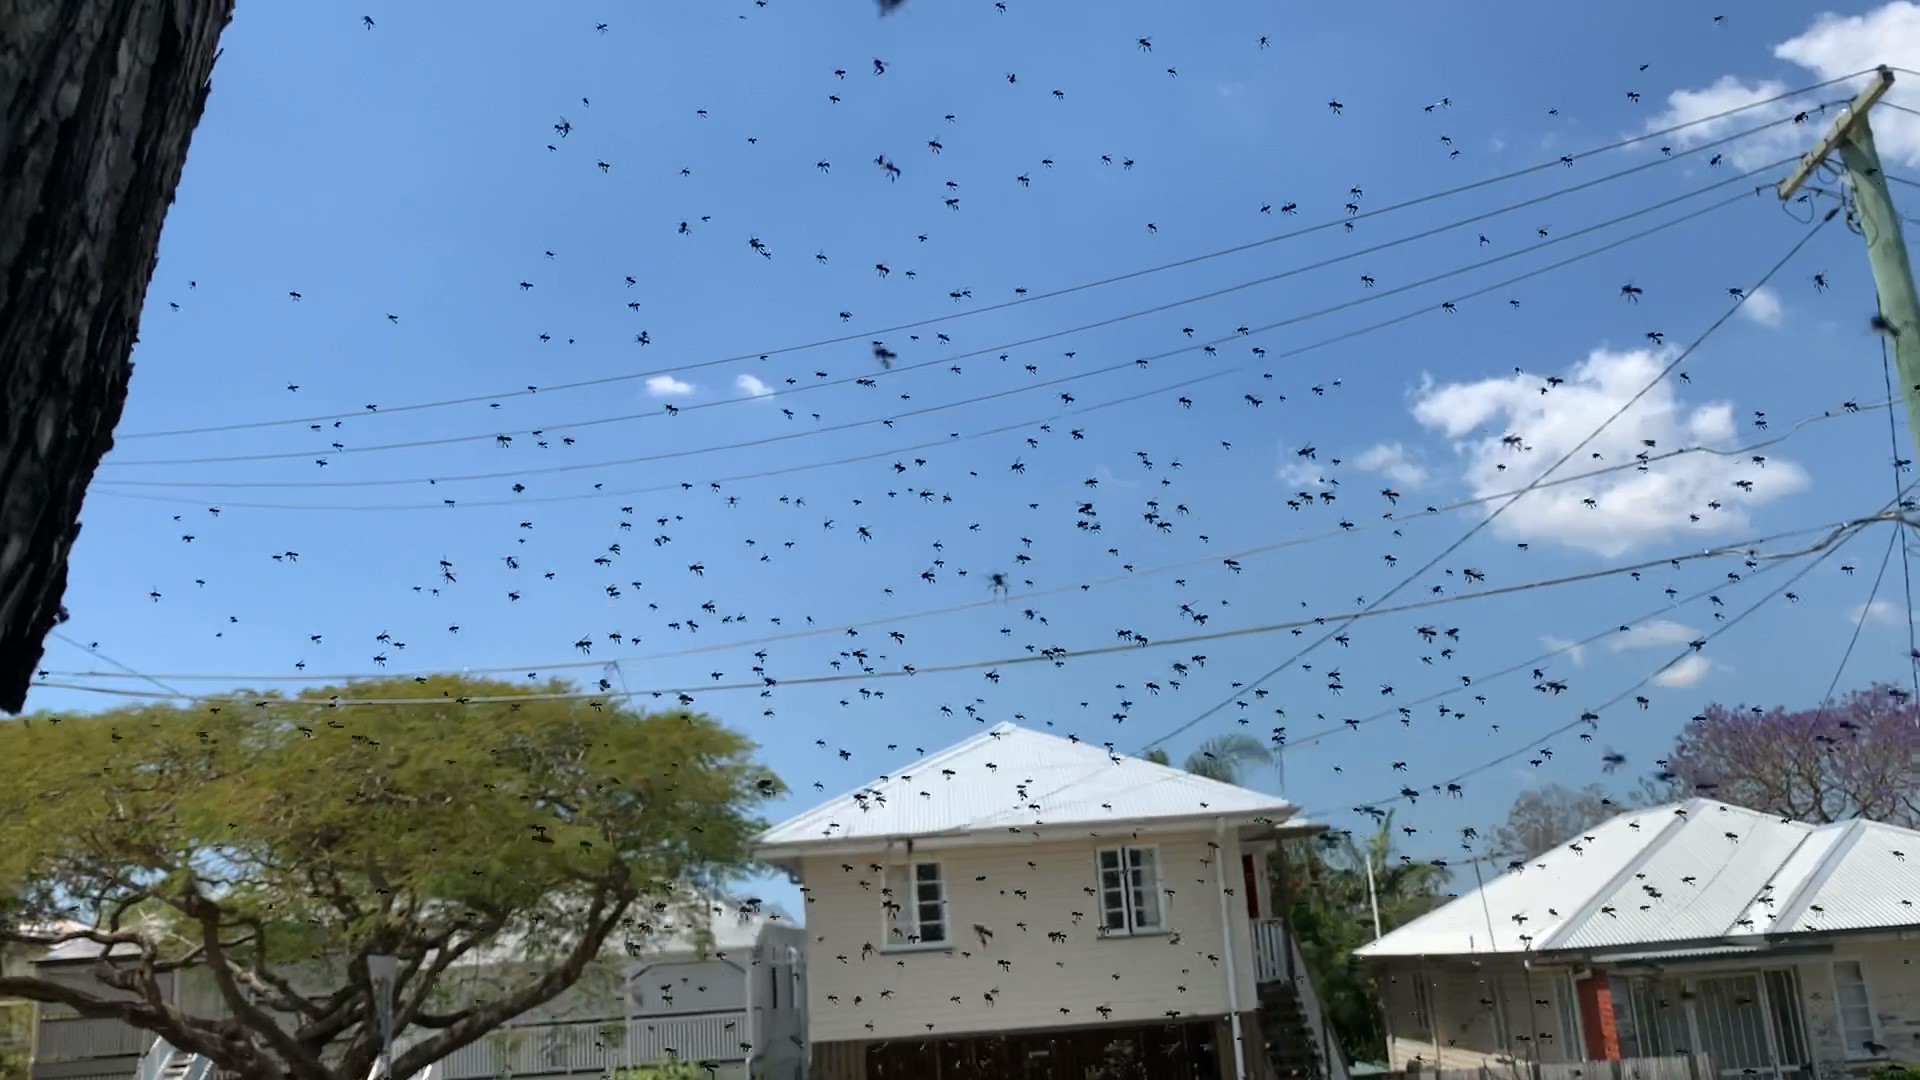 Native stingless bee swarm